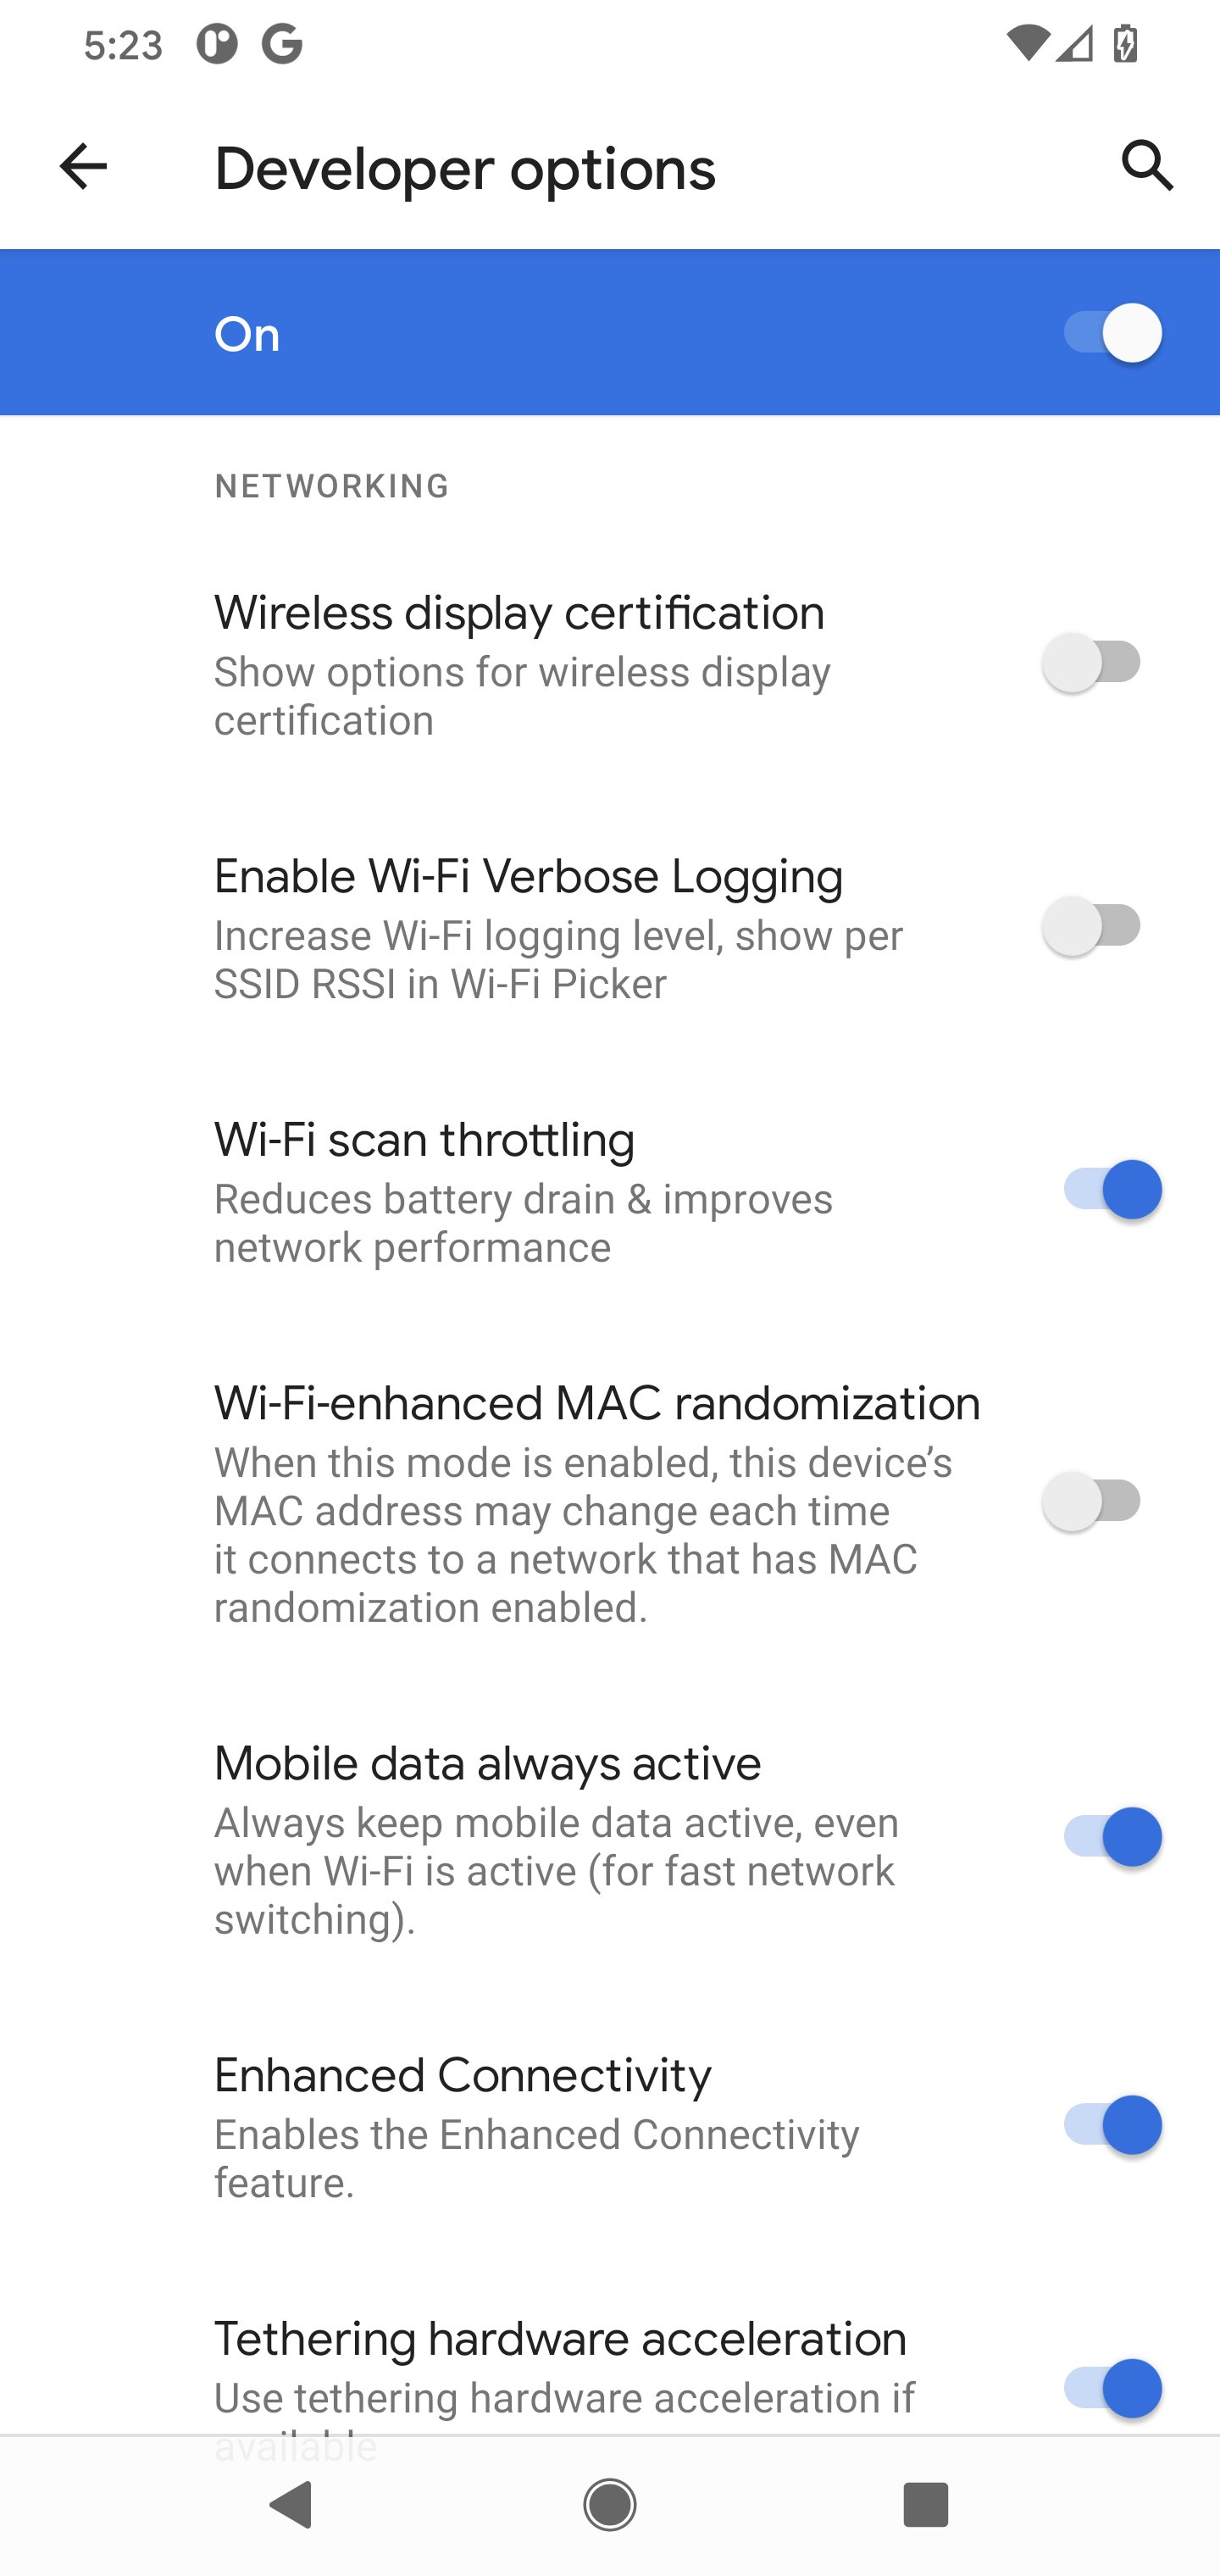 \ Mishaal Rahman على تويتر: "New developer option: "Wi-Fi-enhanced MAC randomization" https://t.co/bDvpnlXdHo"